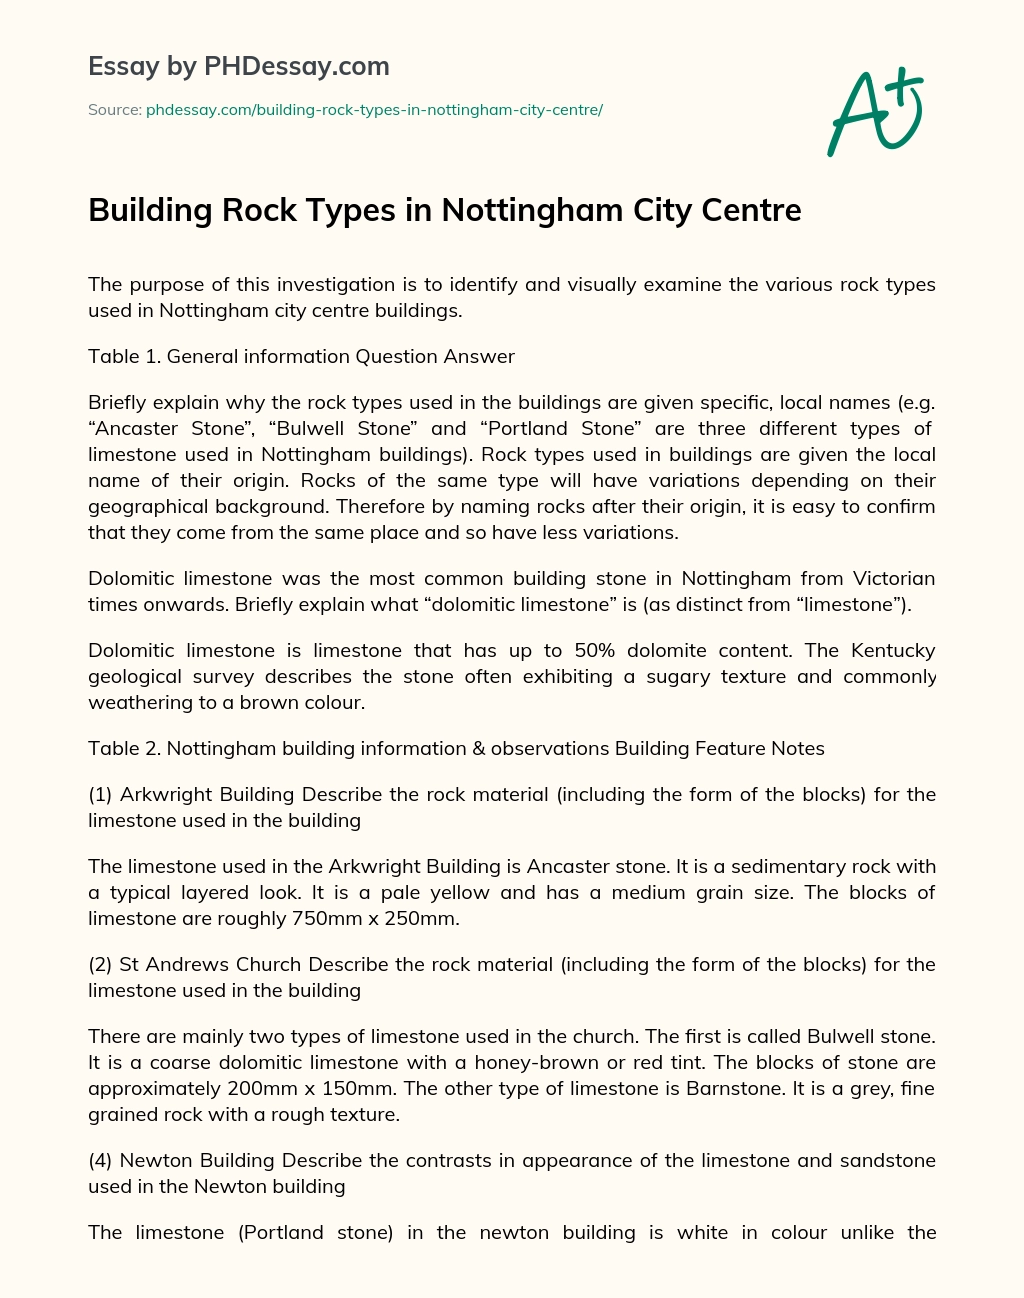 Building Rock Types in Nottingham City Centre essay